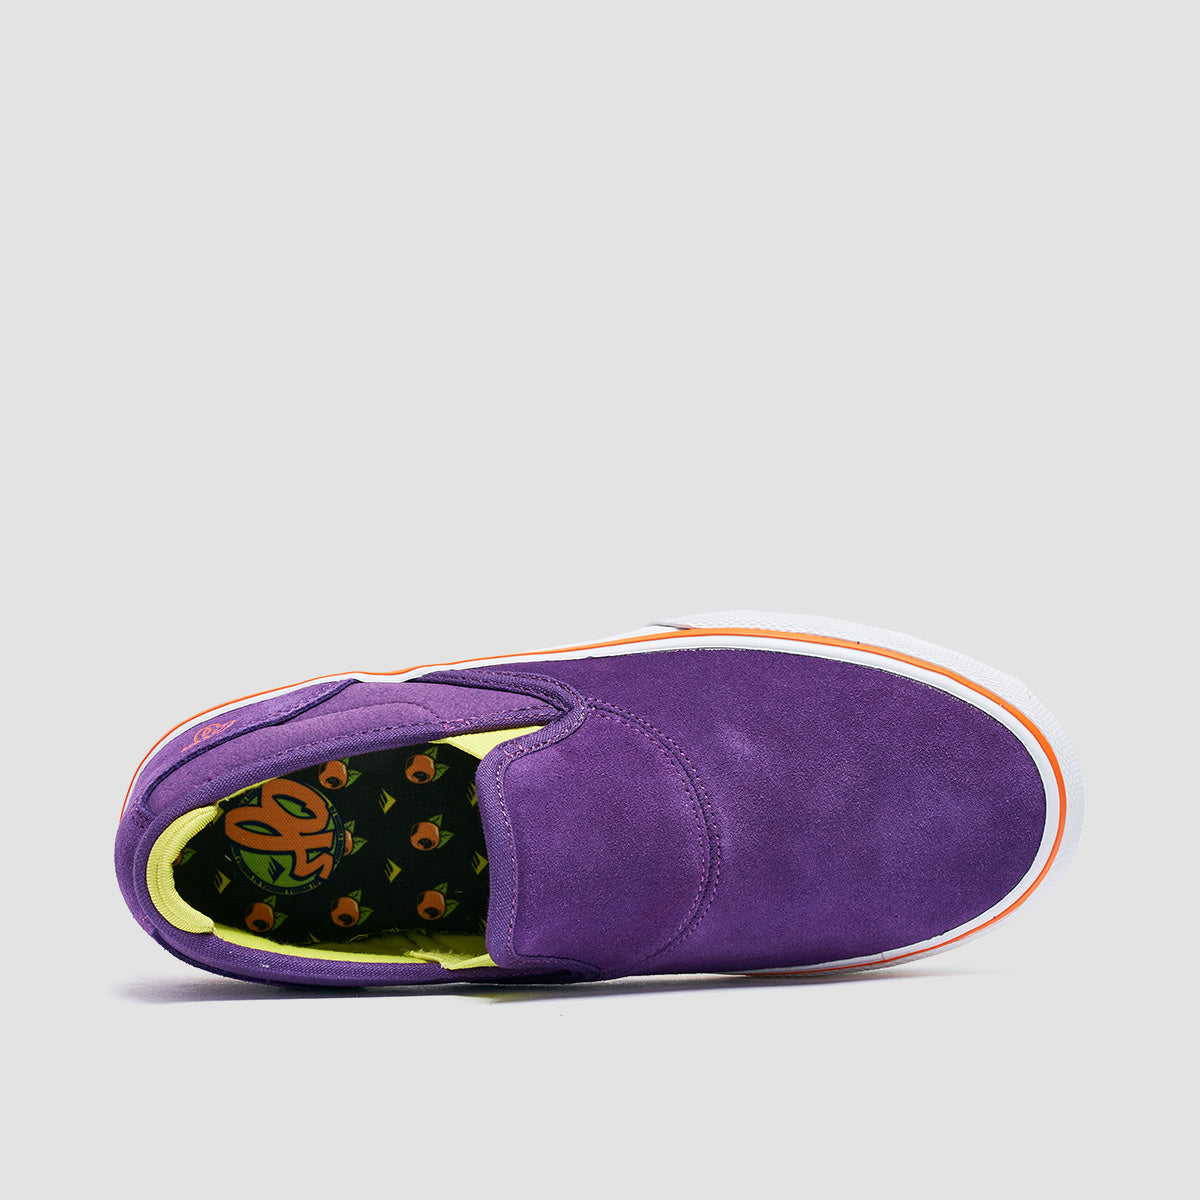 Emerica Wino X Oj Slip On Shoes Purple - Kids